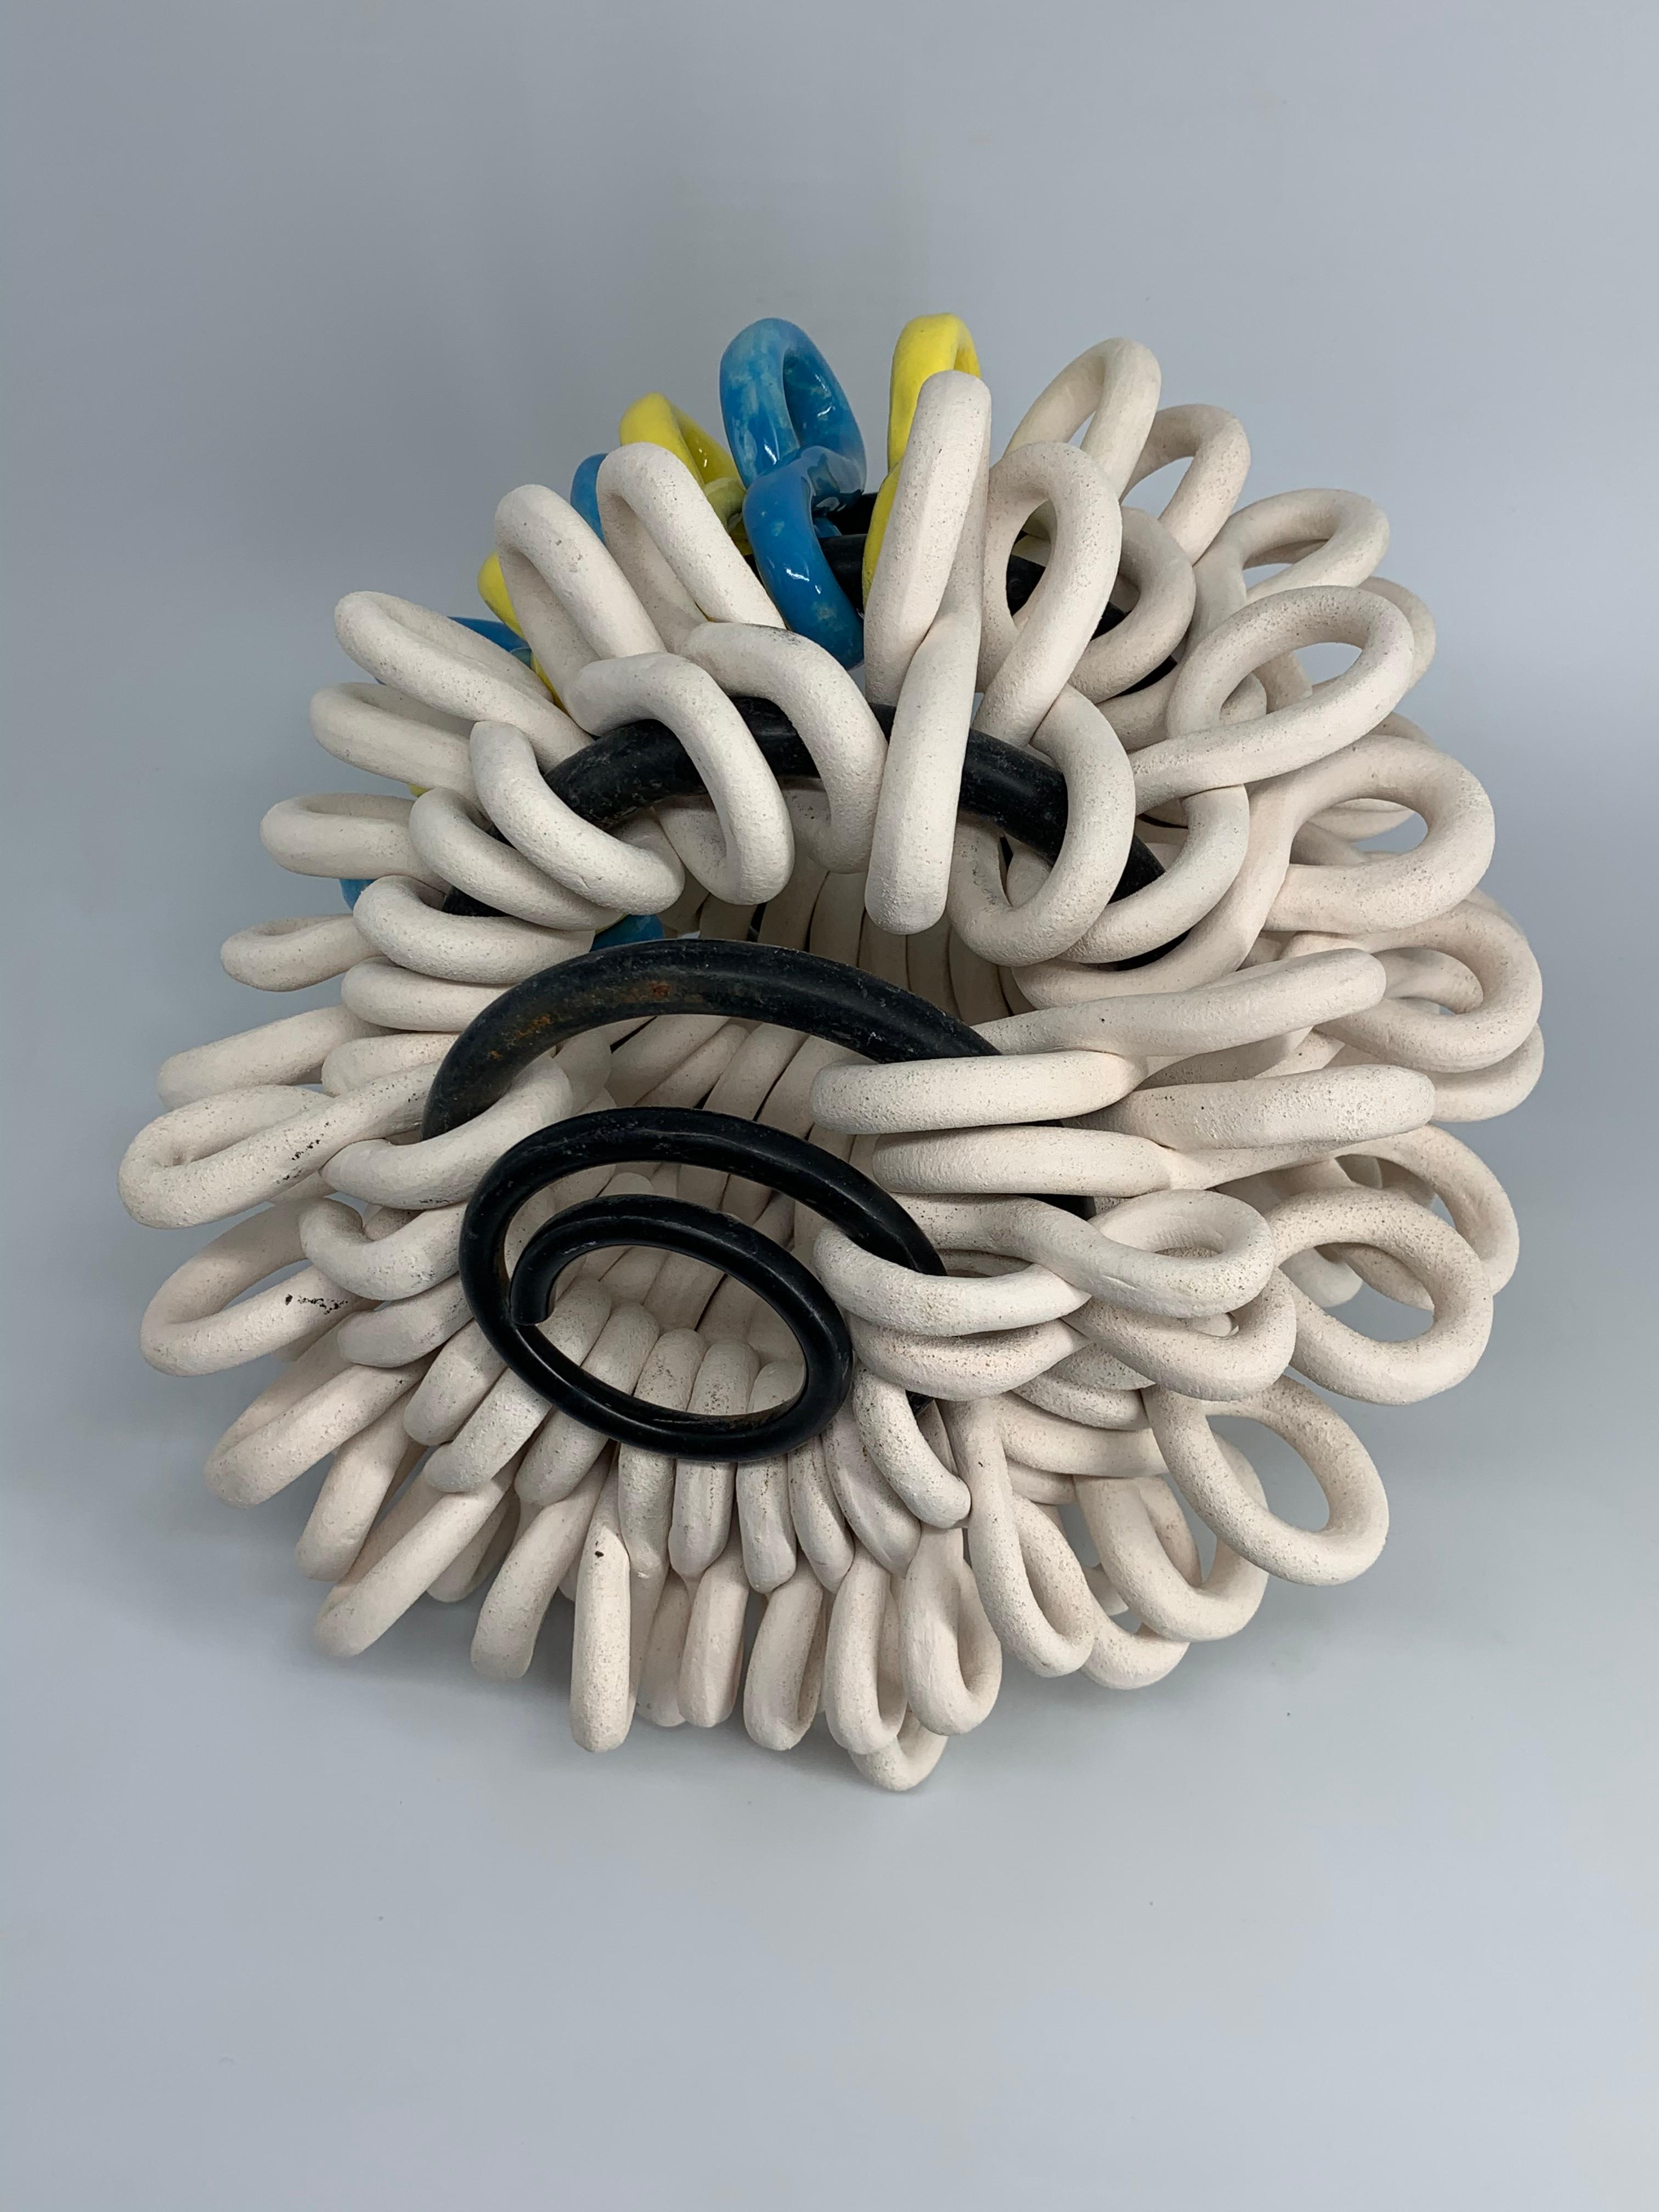 Infinity in infinity in a spiral III - Abstract Geometric Sculpture by Olesia Dvorak-Galik